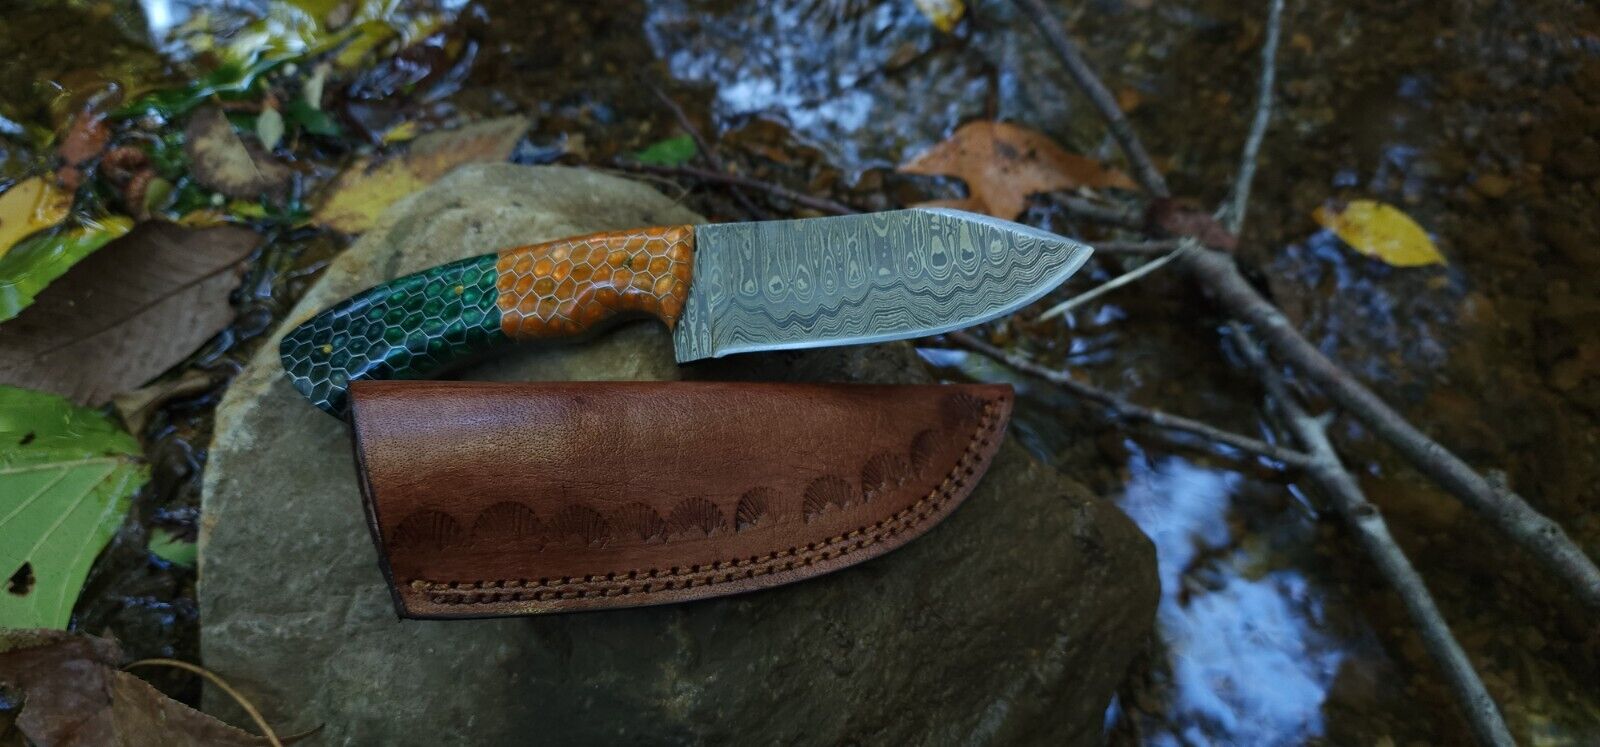 Damascus steel knife, Birthday gift, Hunting knife, Camping tool, handmade knife